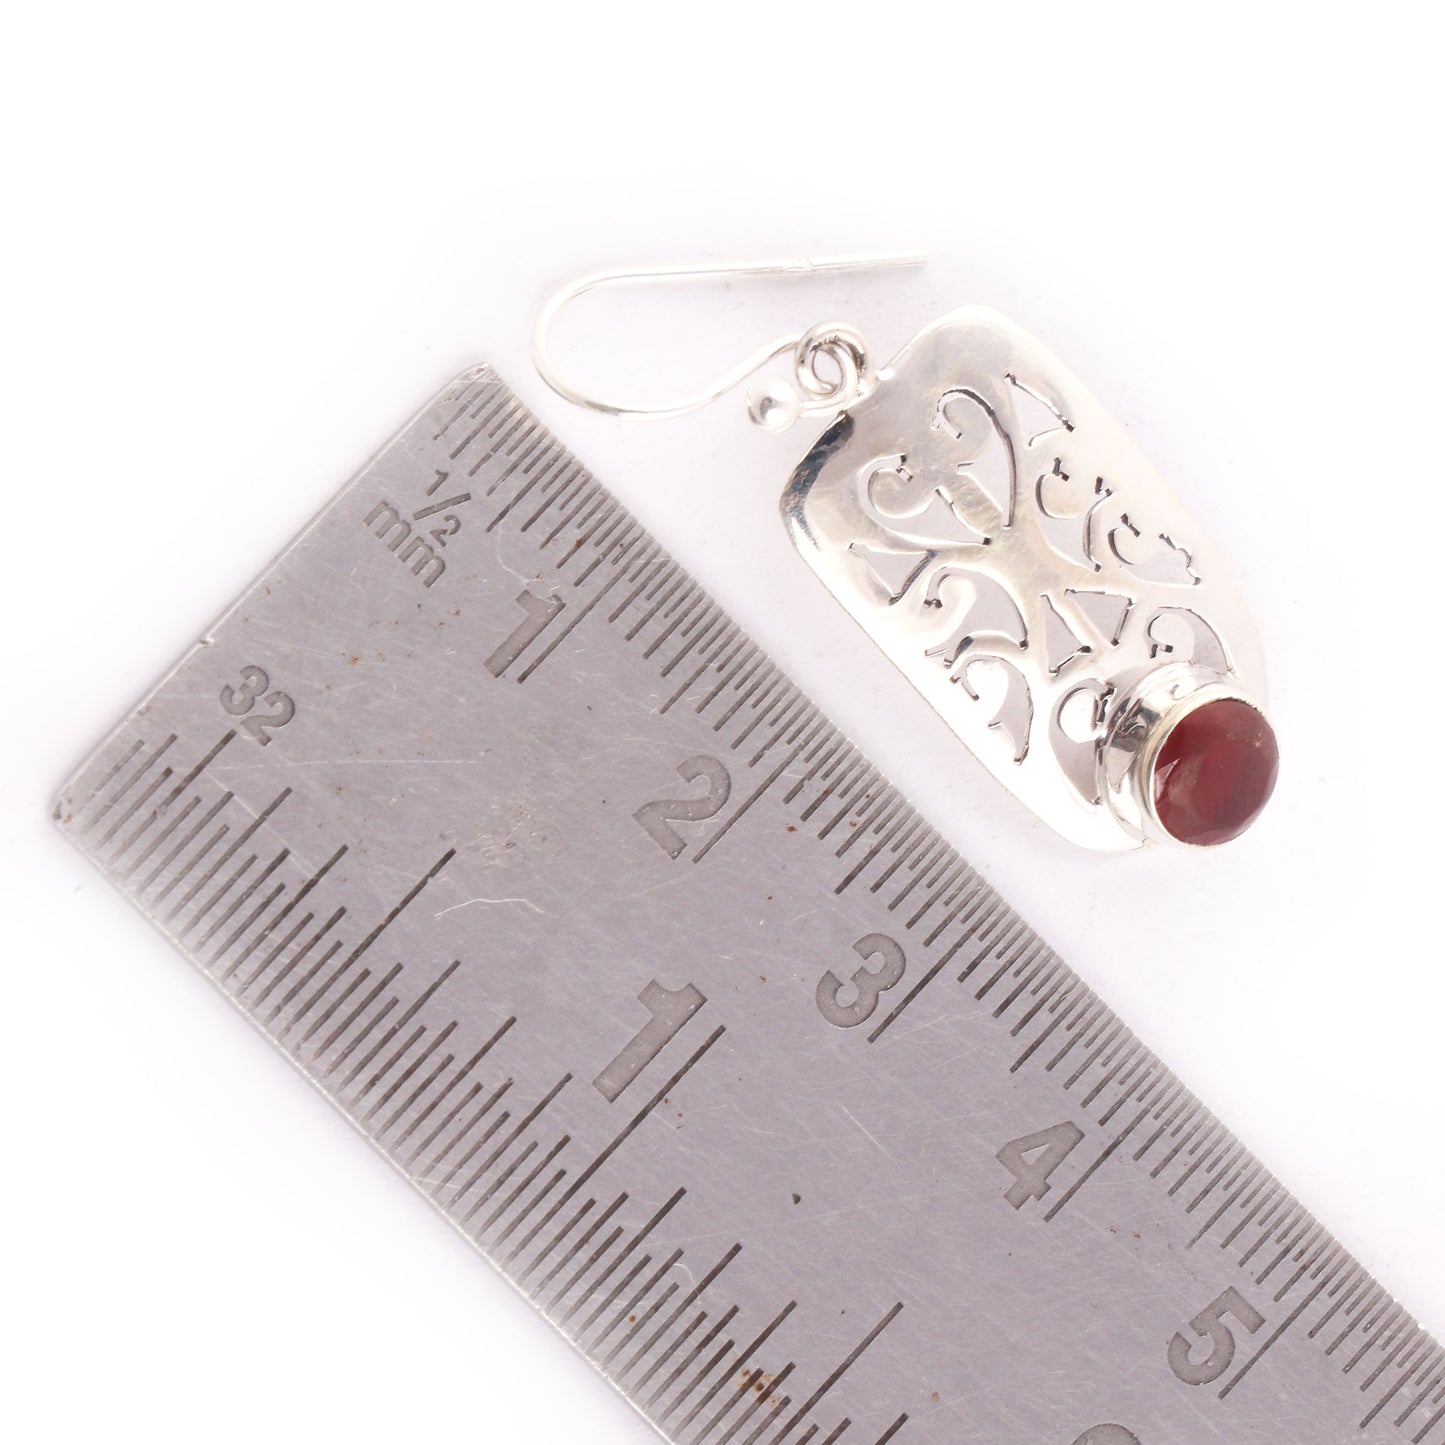 925 Sterling Silver Natural Garnet Gemstone Earring Jewelry